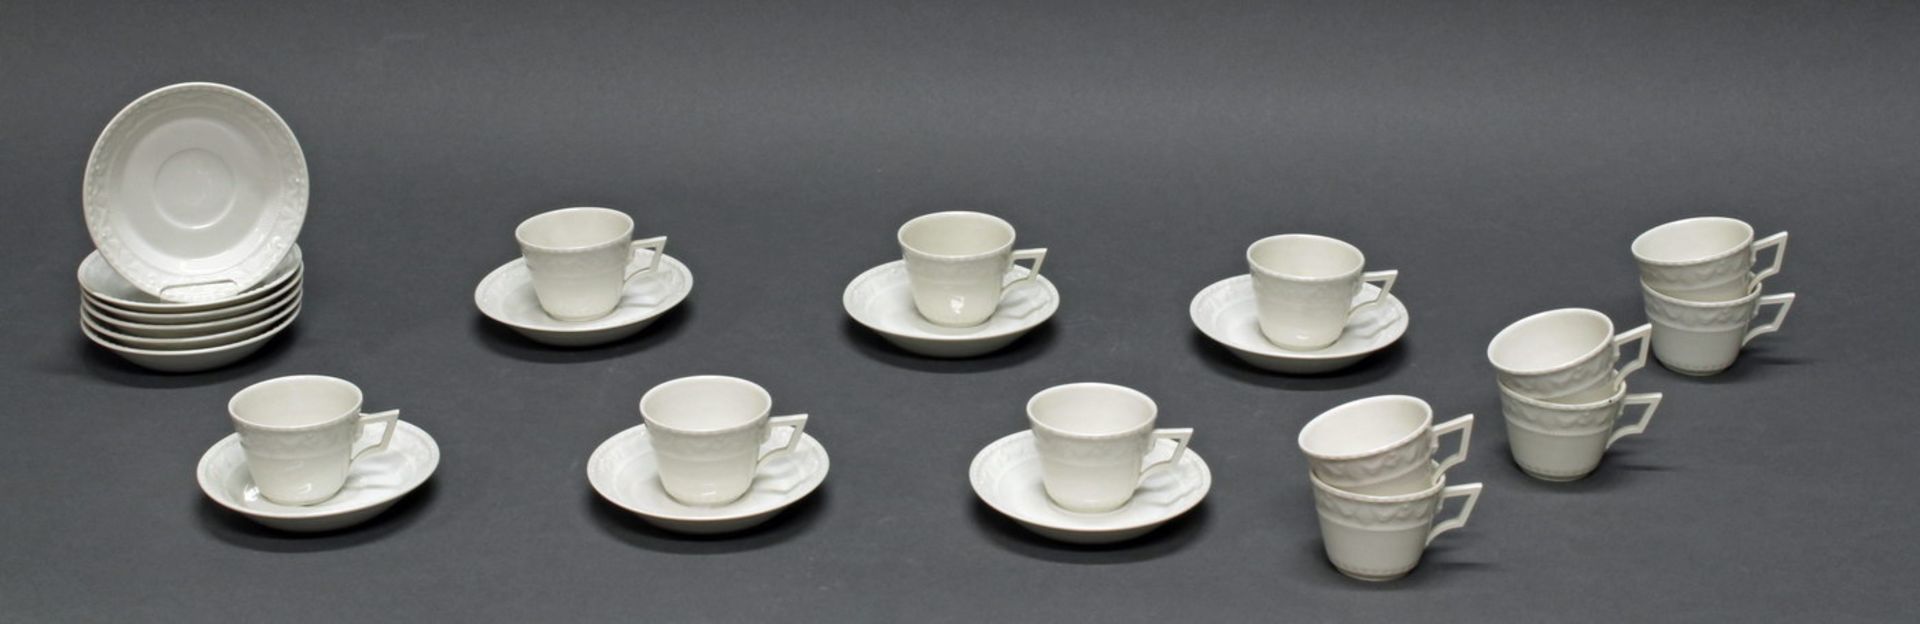 12 Espressotassen, 12 Untertassen, KPM Berlin, Kurland, Weißporzellan, 4.5 cm hoch